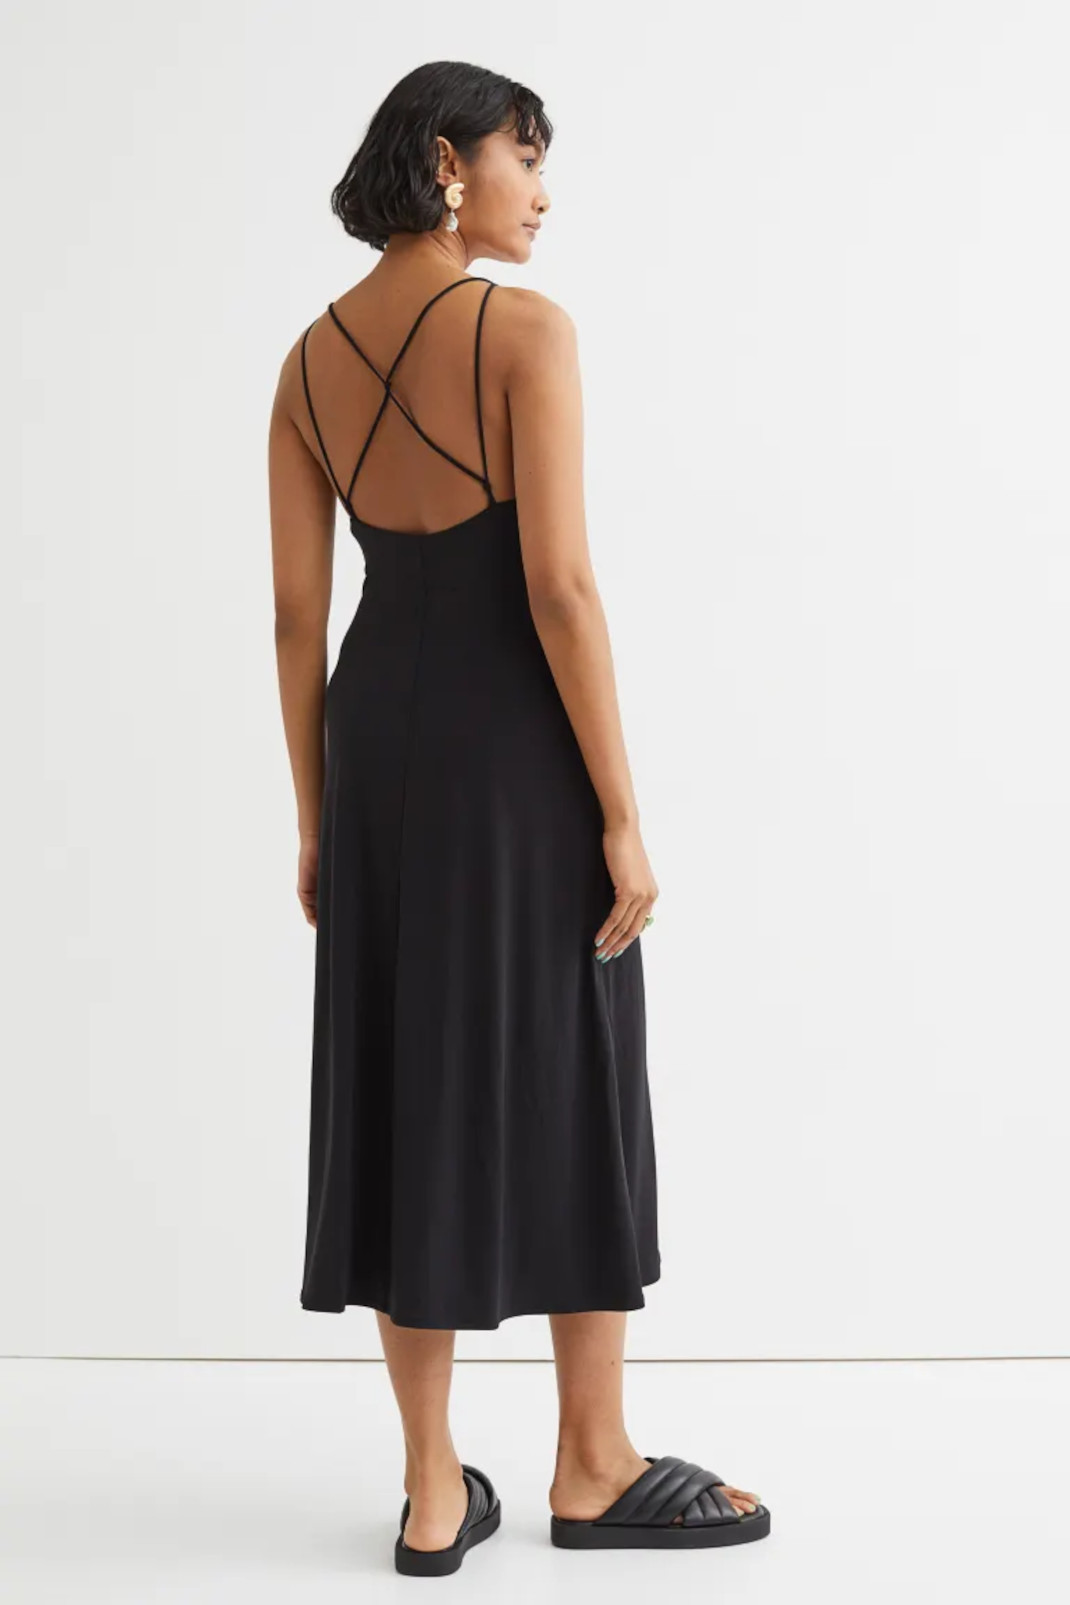 H Tόνια Σωτηροπούλου με μαύρο φόρεμα από τα H&M -Σε στιλ κομπινεζόν, πολύ φινετσάτο